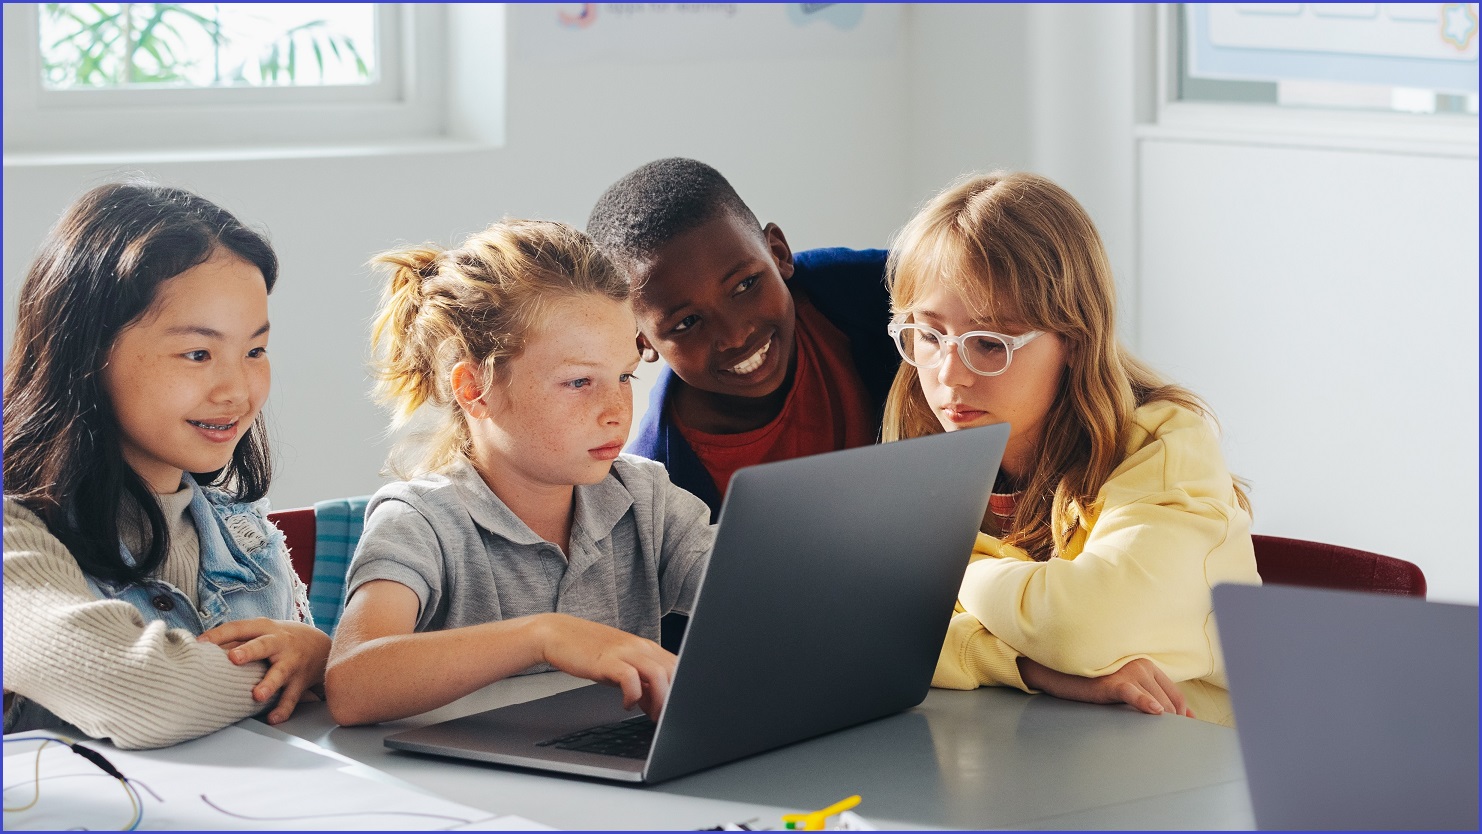 Four children sharing a laptop